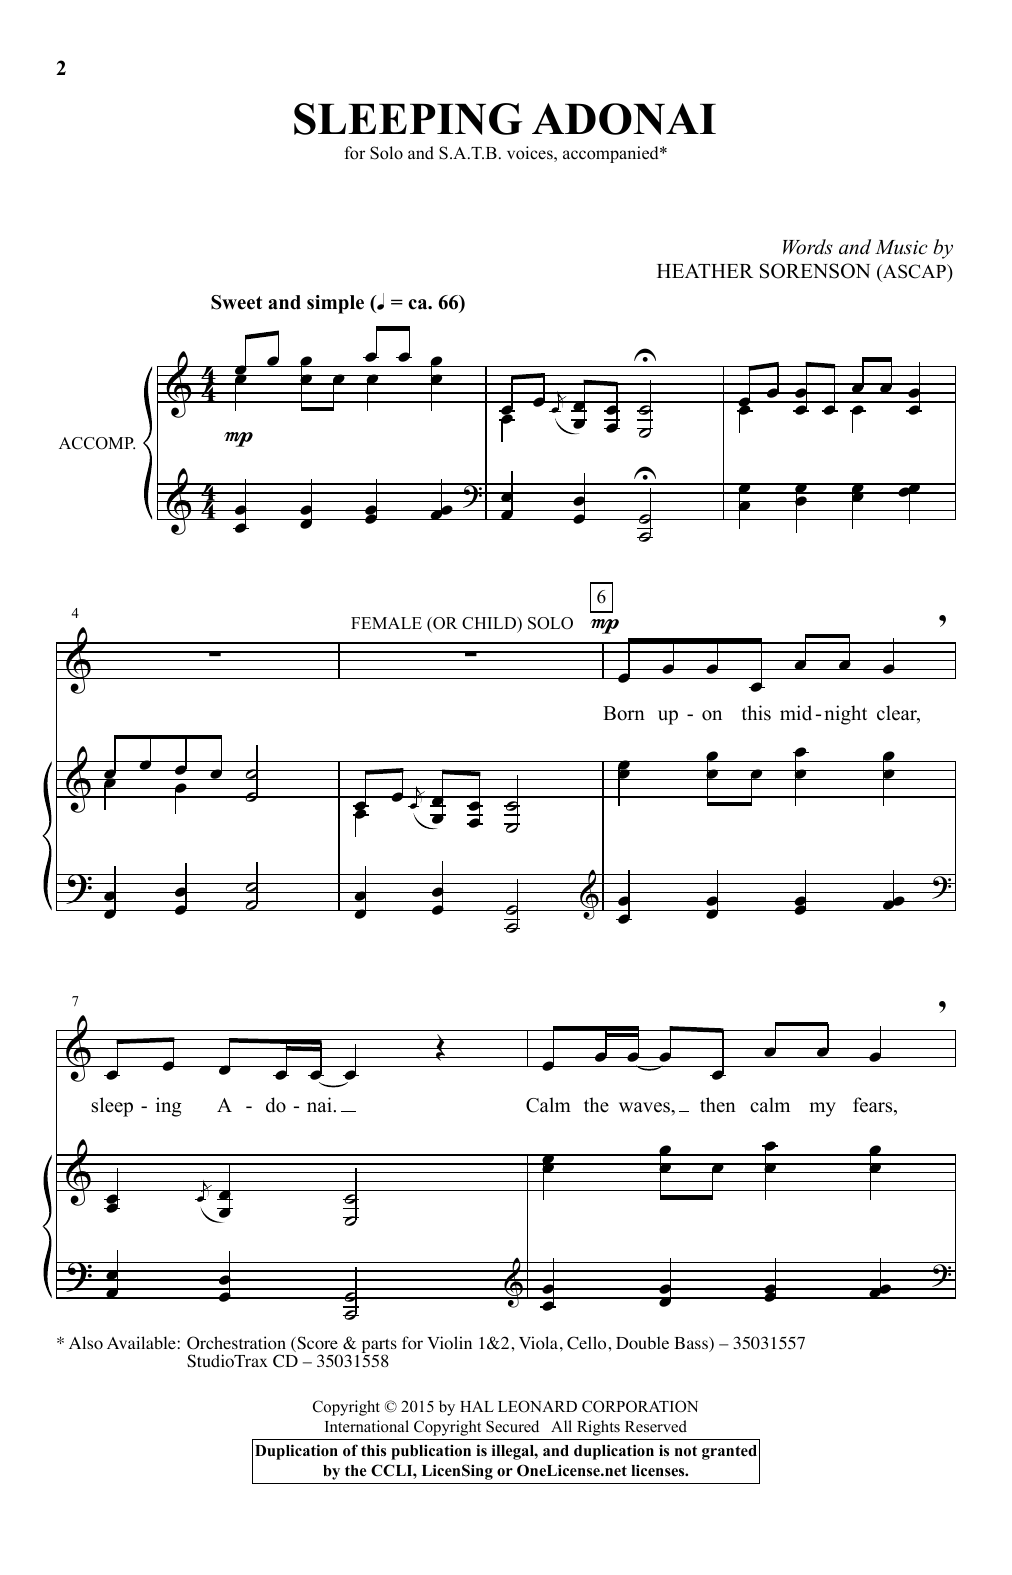 Heather Sorenson Sleeping Adonai Sheet Music Notes & Chords for SATB - Download or Print PDF